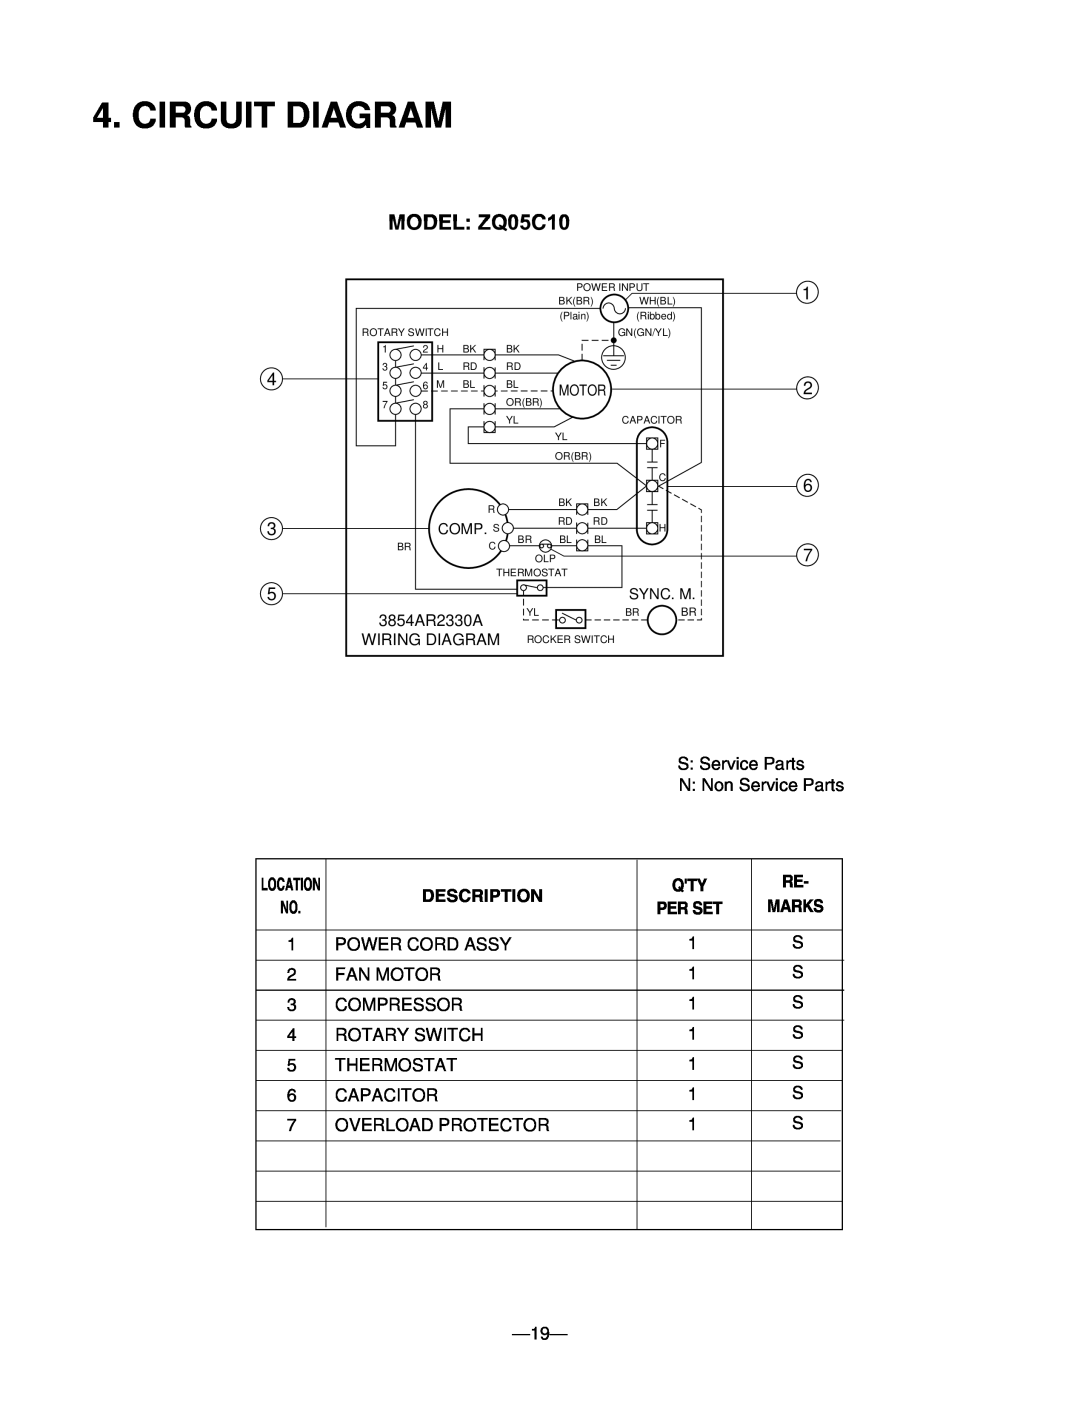 Friedrich manual Circuit Diagram, MODEL ZQ05C10, Description 